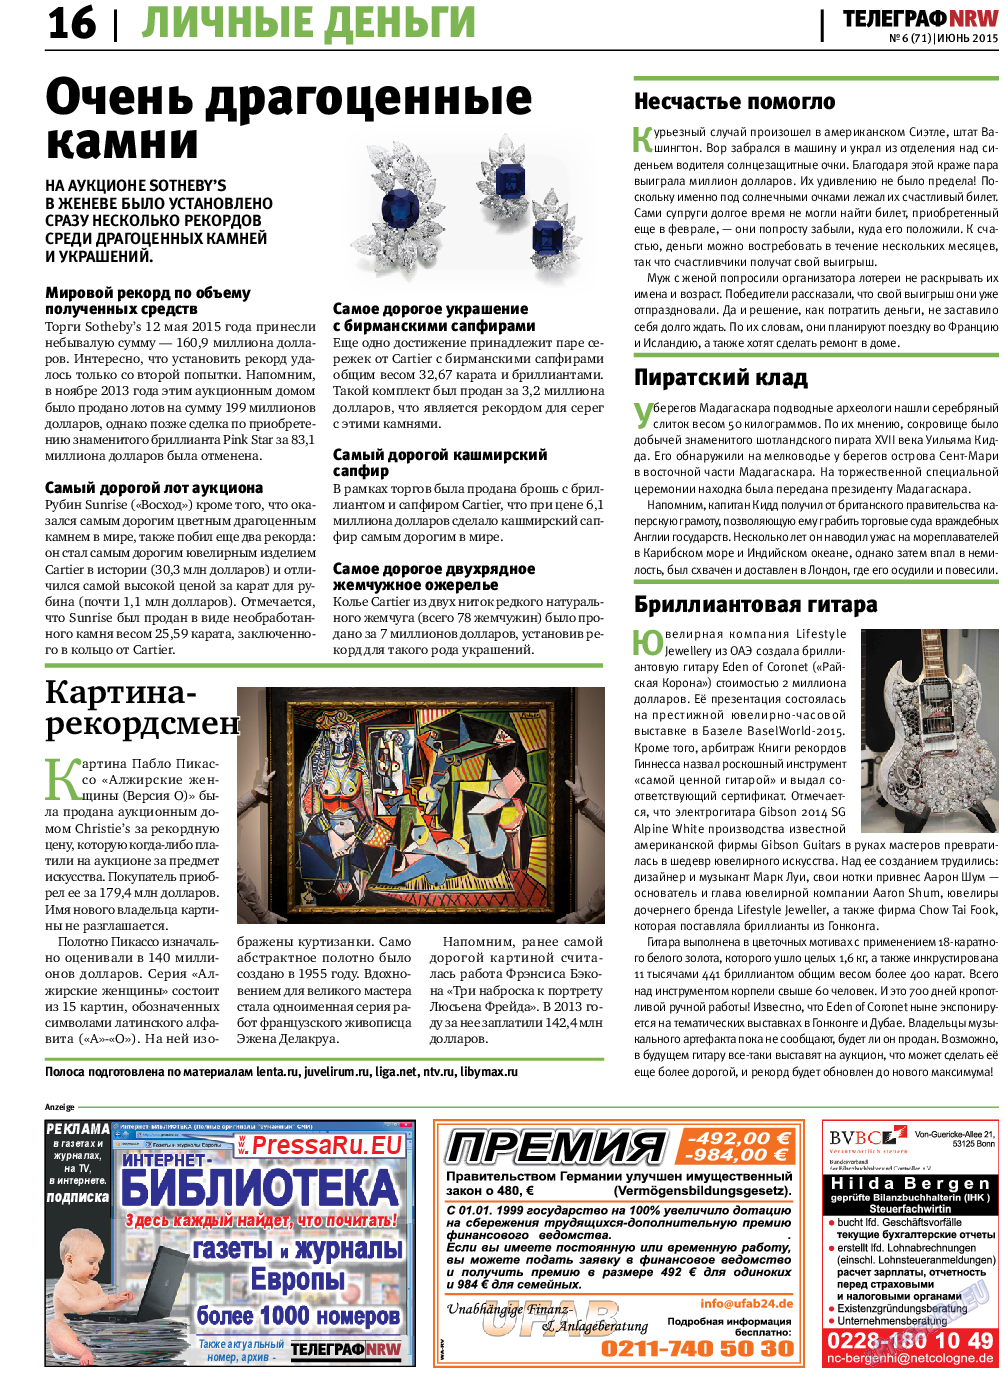 Телеграф NRW, газета. 2015 №6 стр.16